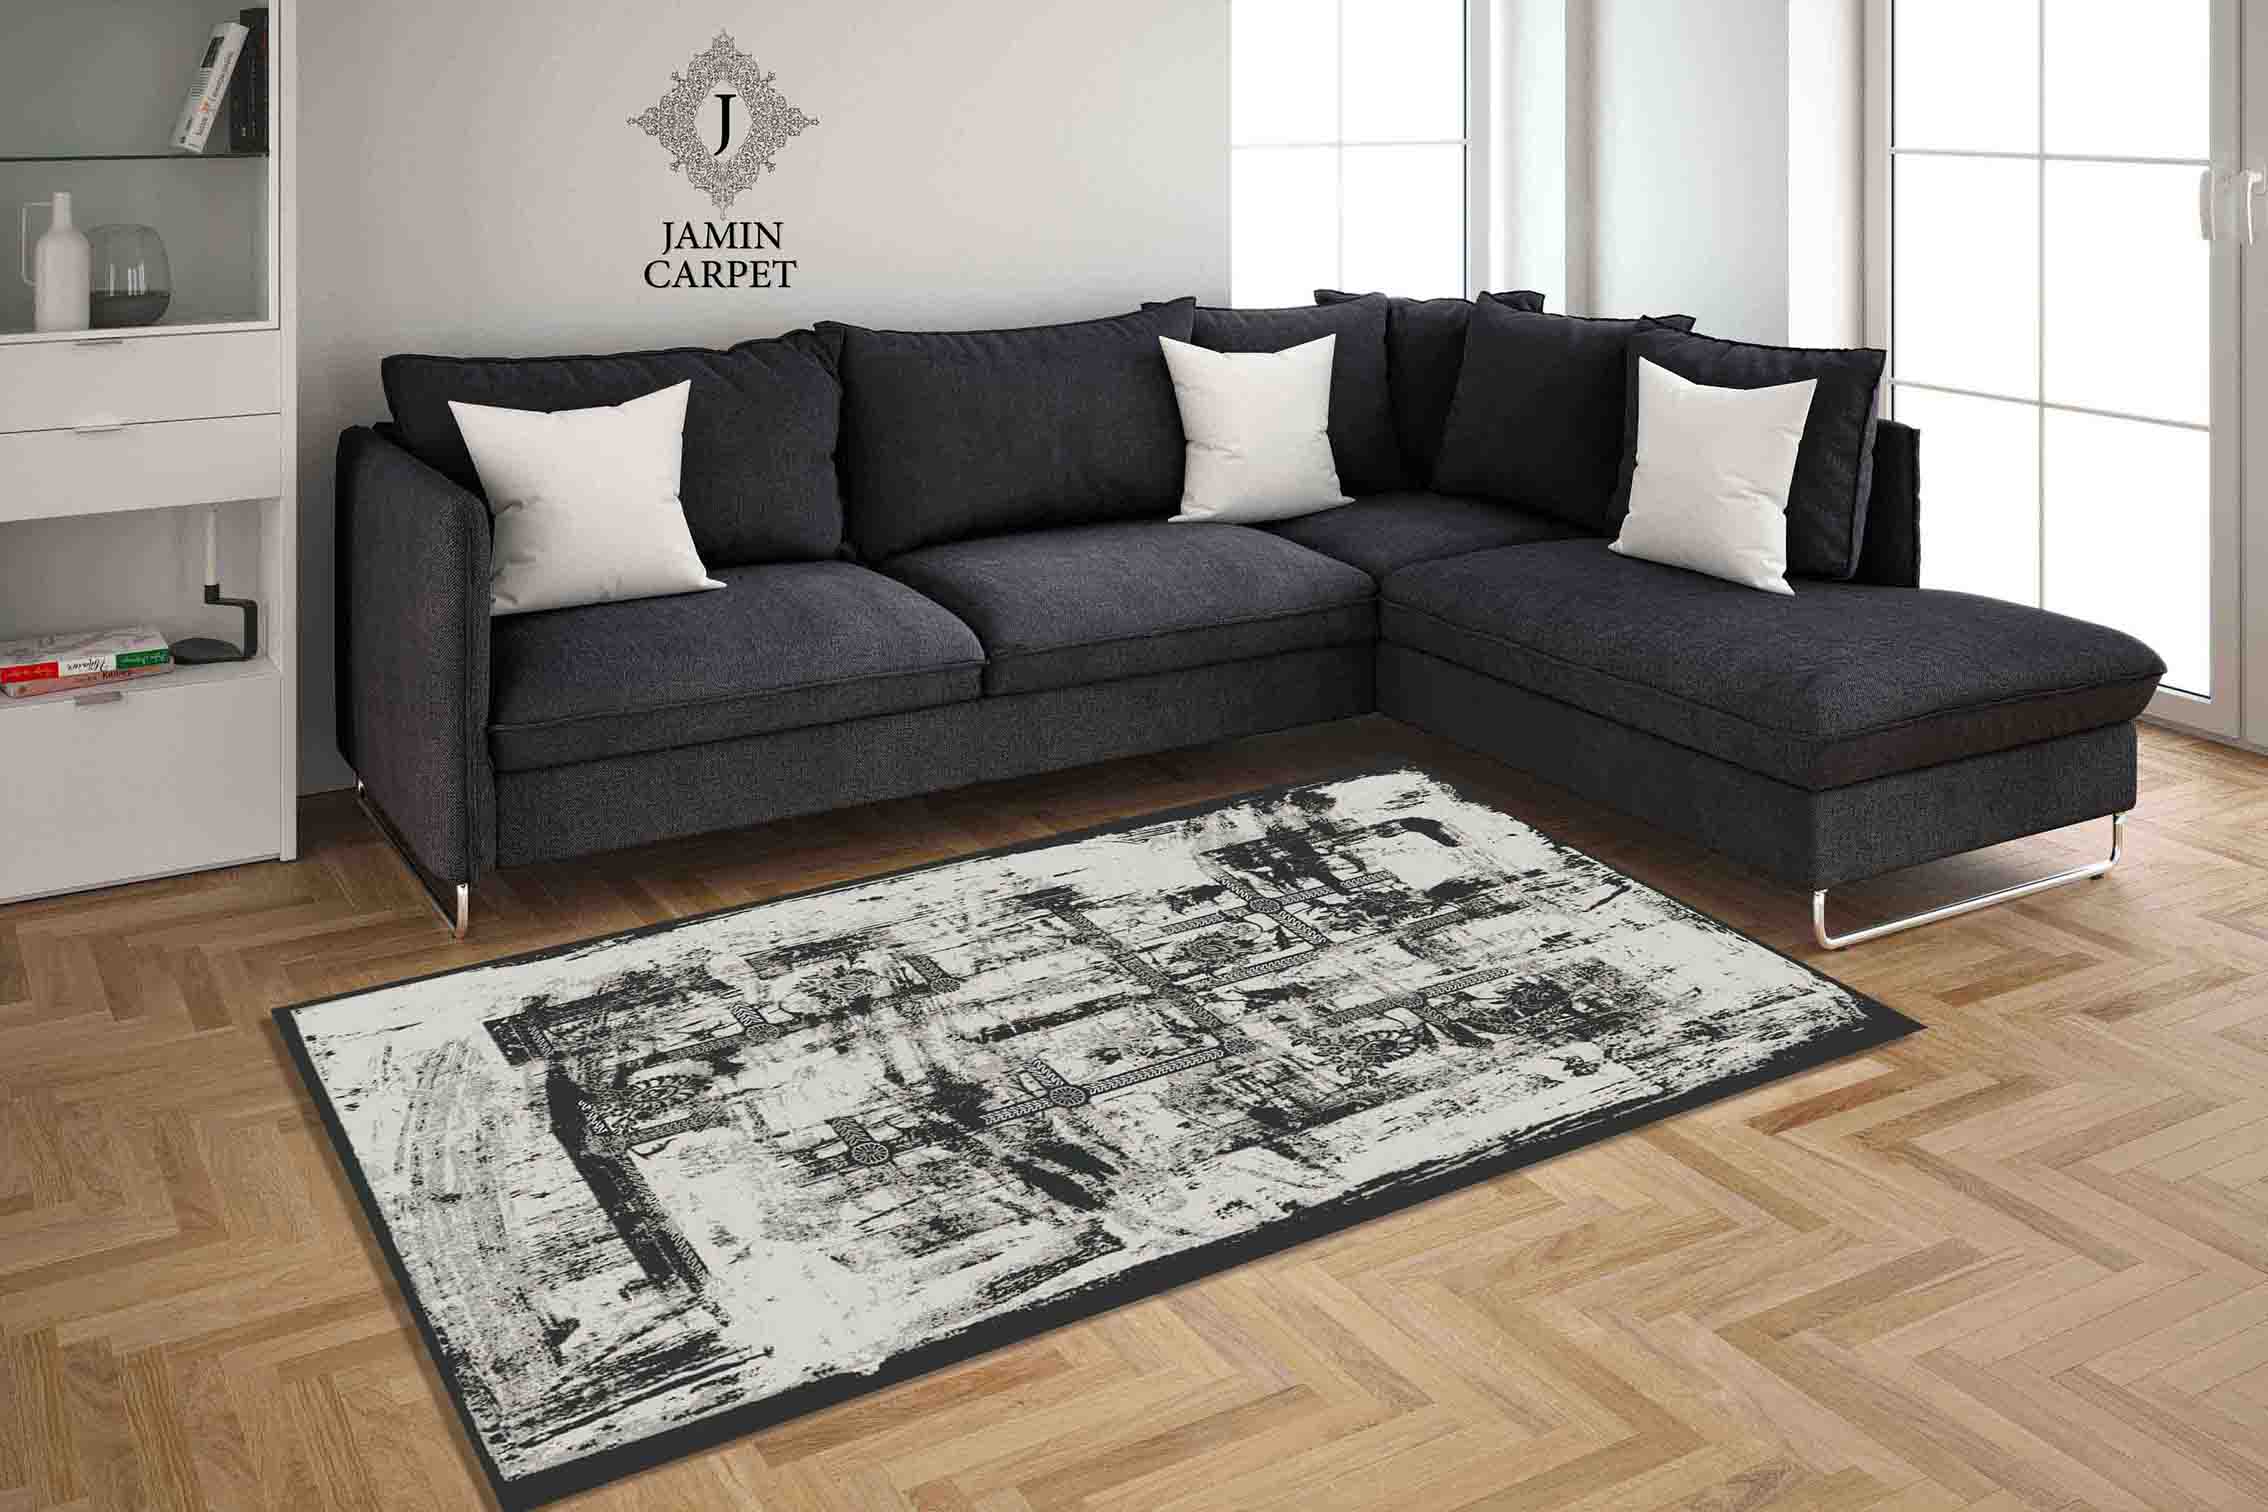 Fantasy carpet, code 245, comb 400, density 1800, all acrylic